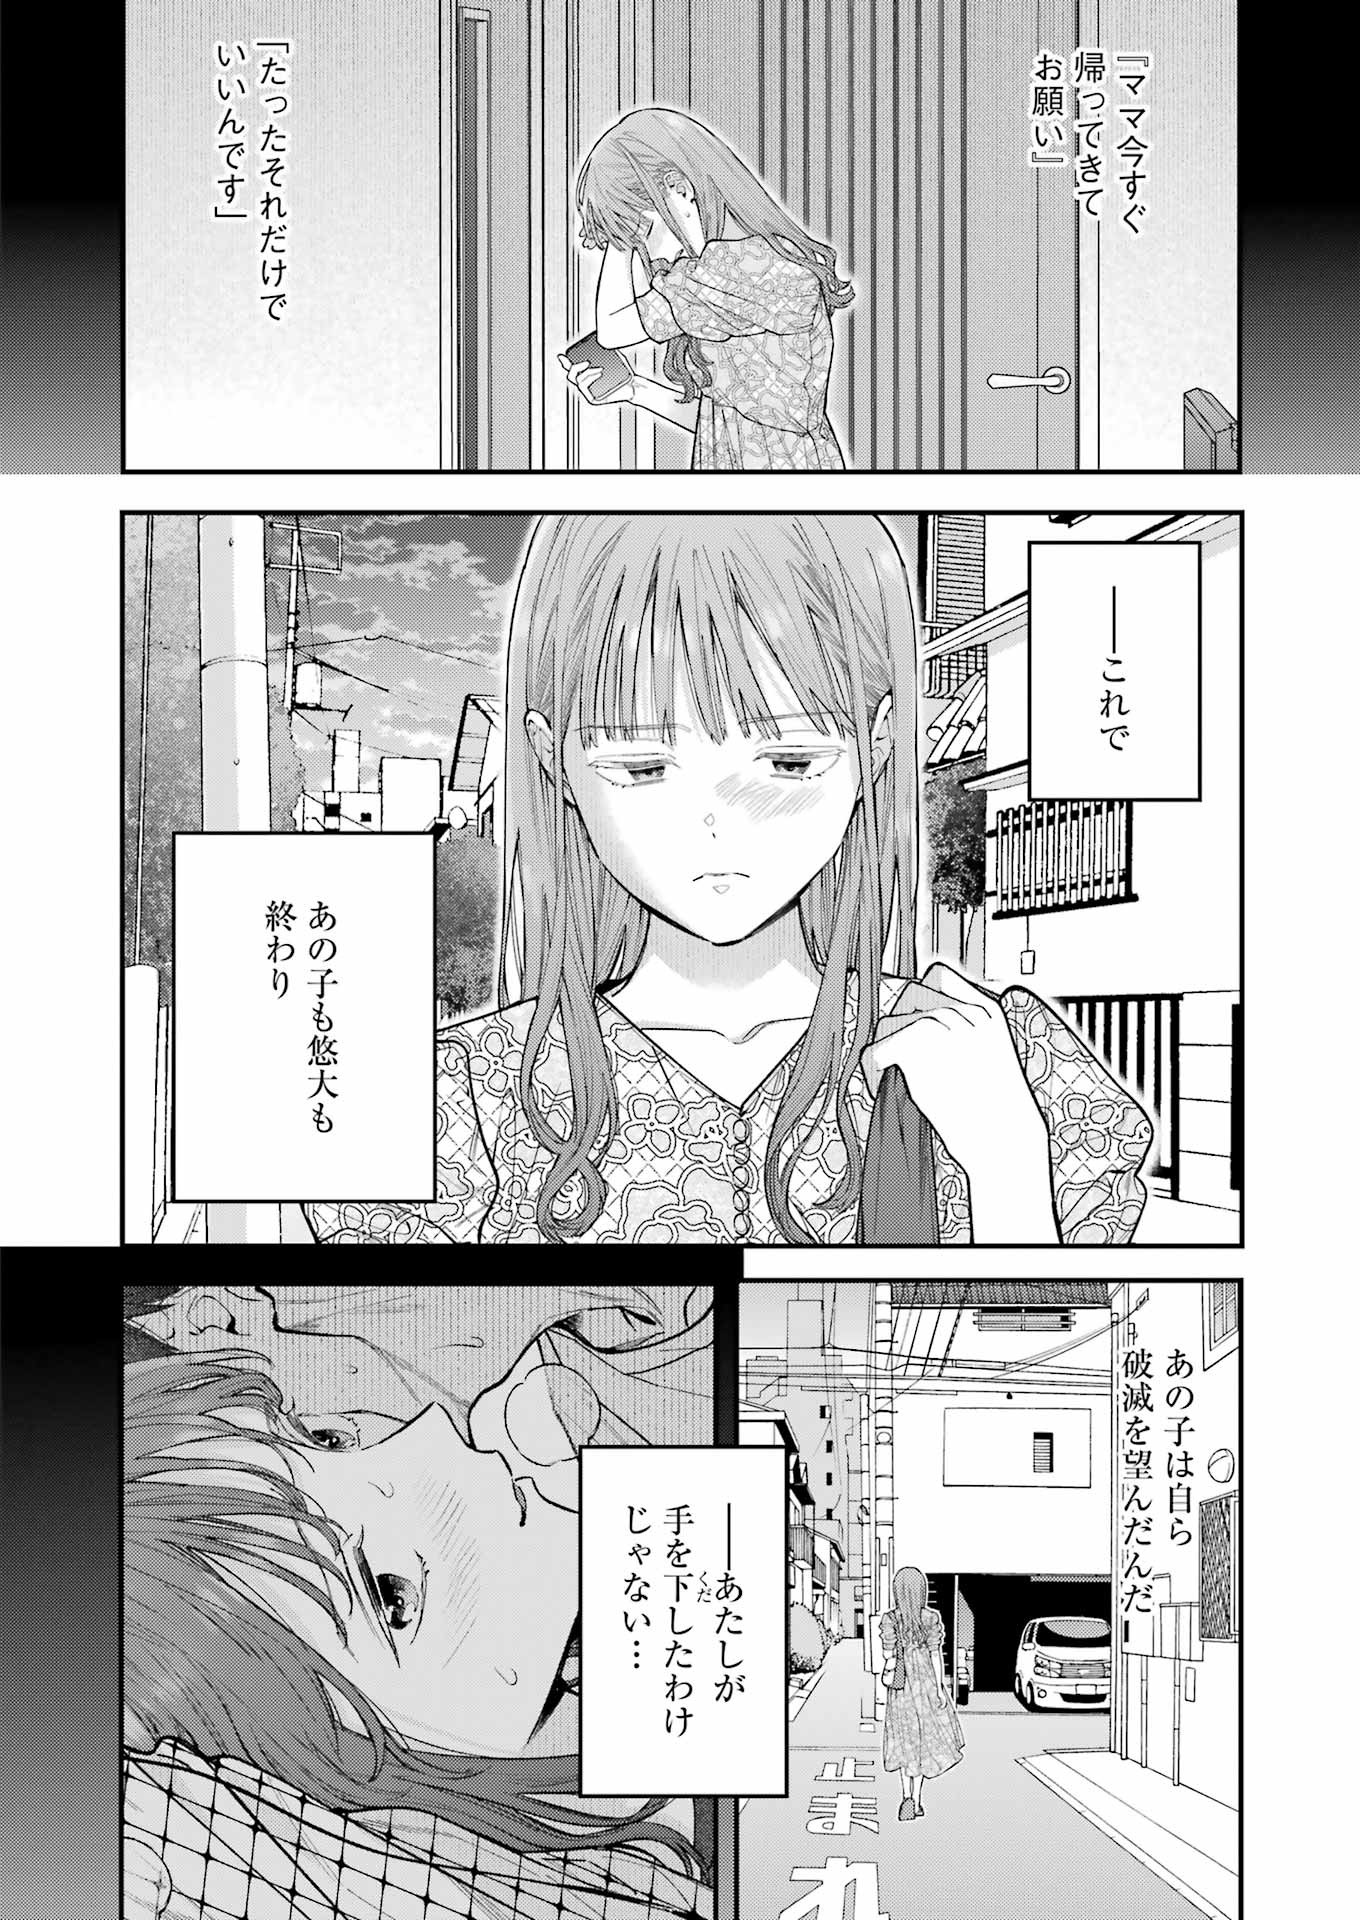 Jigoku ni Ochite yo, Onii-chan - Chapter 27 - Page 2